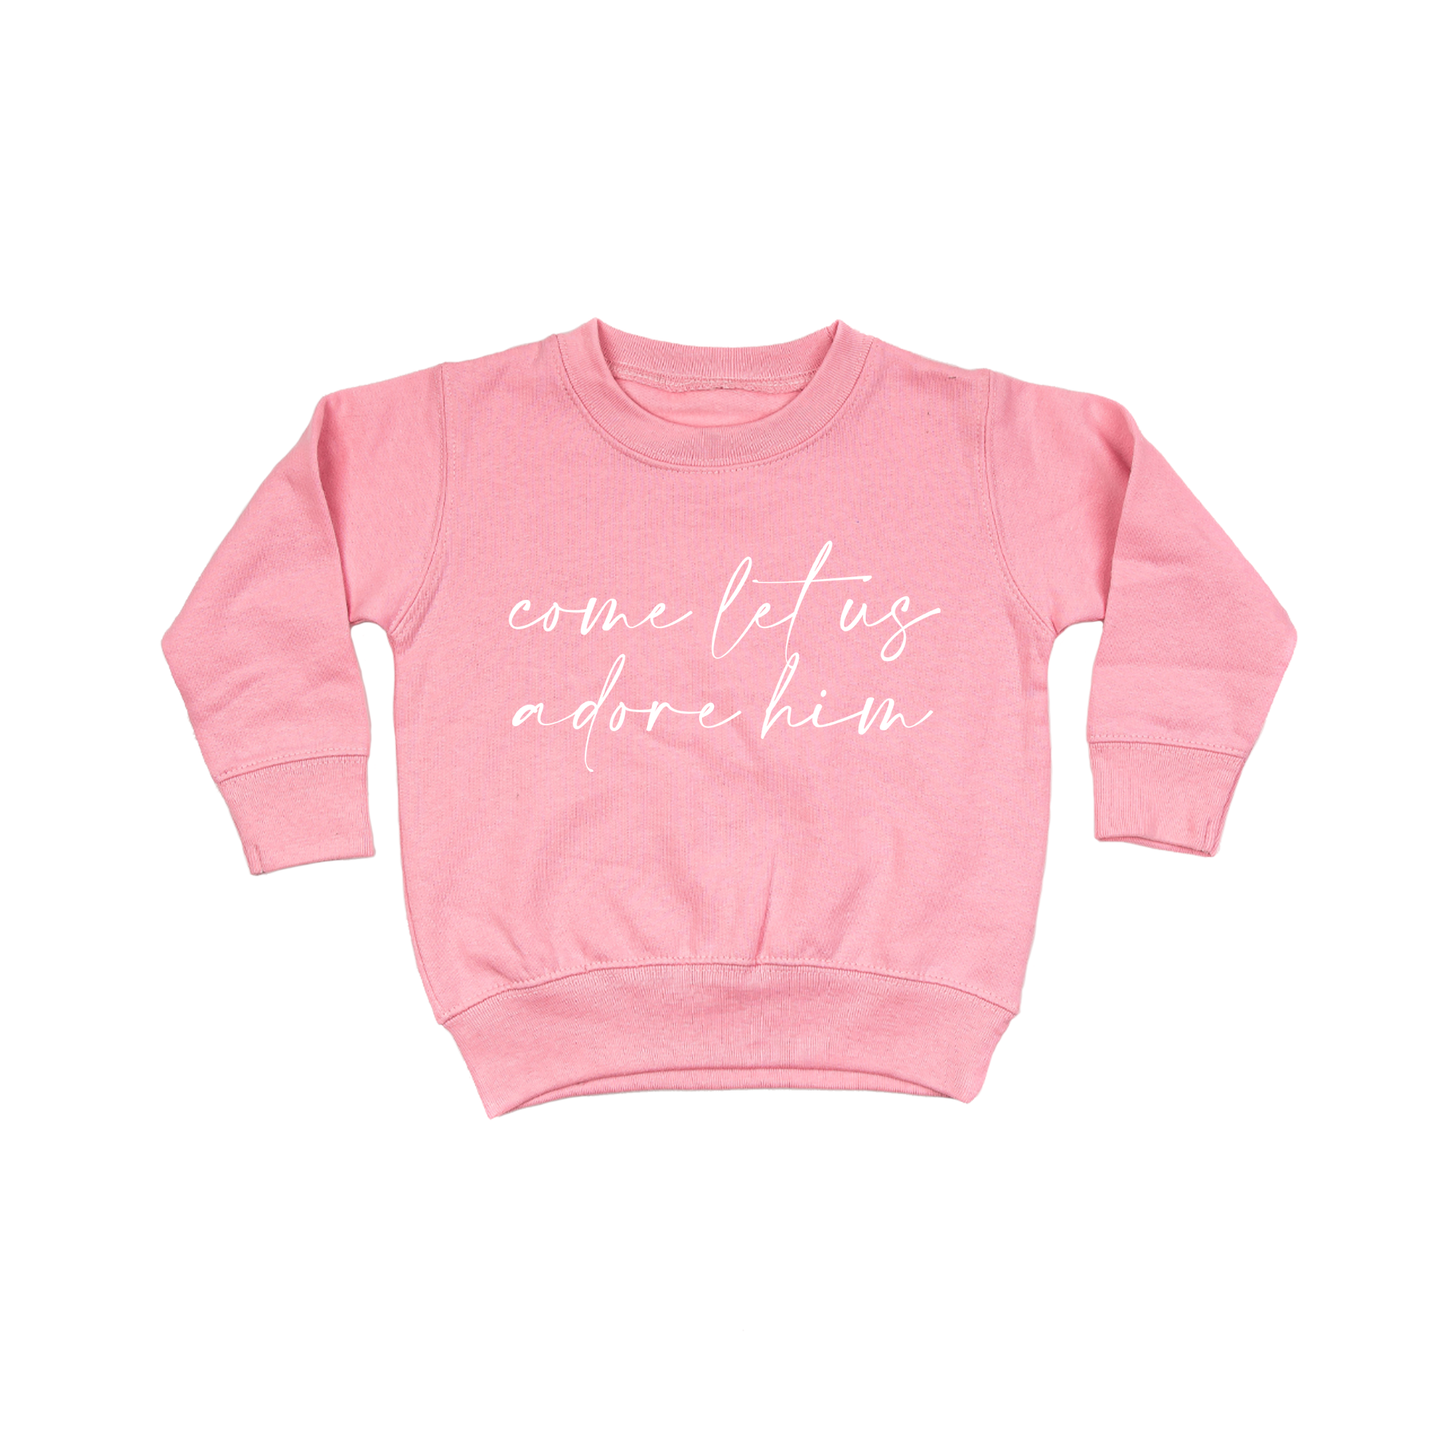 Come Let Us Adore Him (White) - Kids Sweatshirt (Pink)